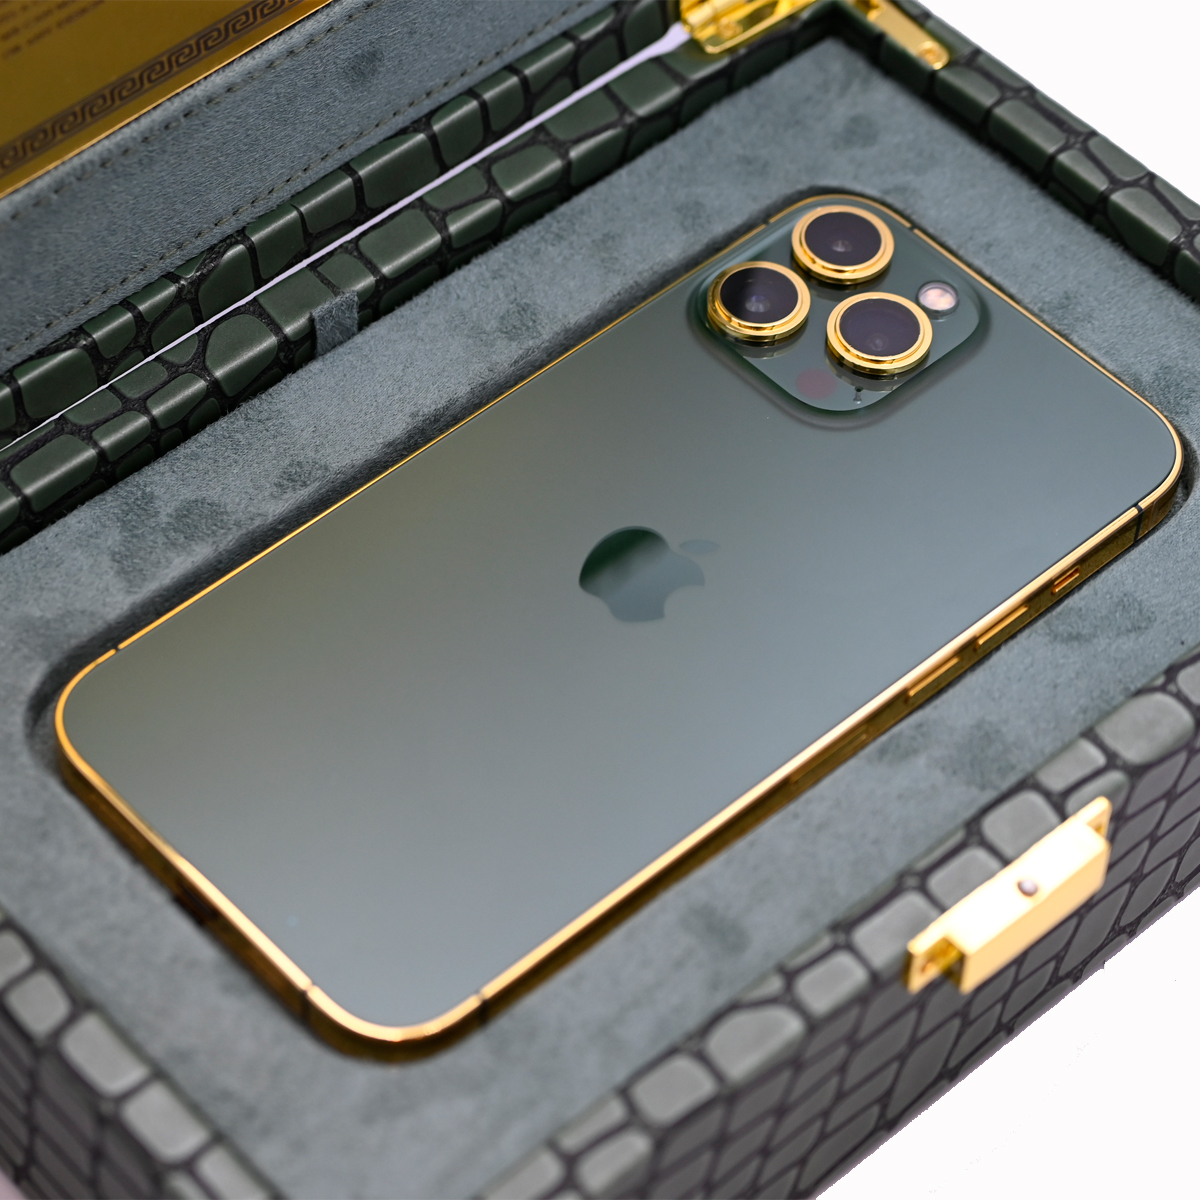 Caviar Luxury Customized 24k Gold Frame iPhone 13 Pro Max - Midnight Green 128GB